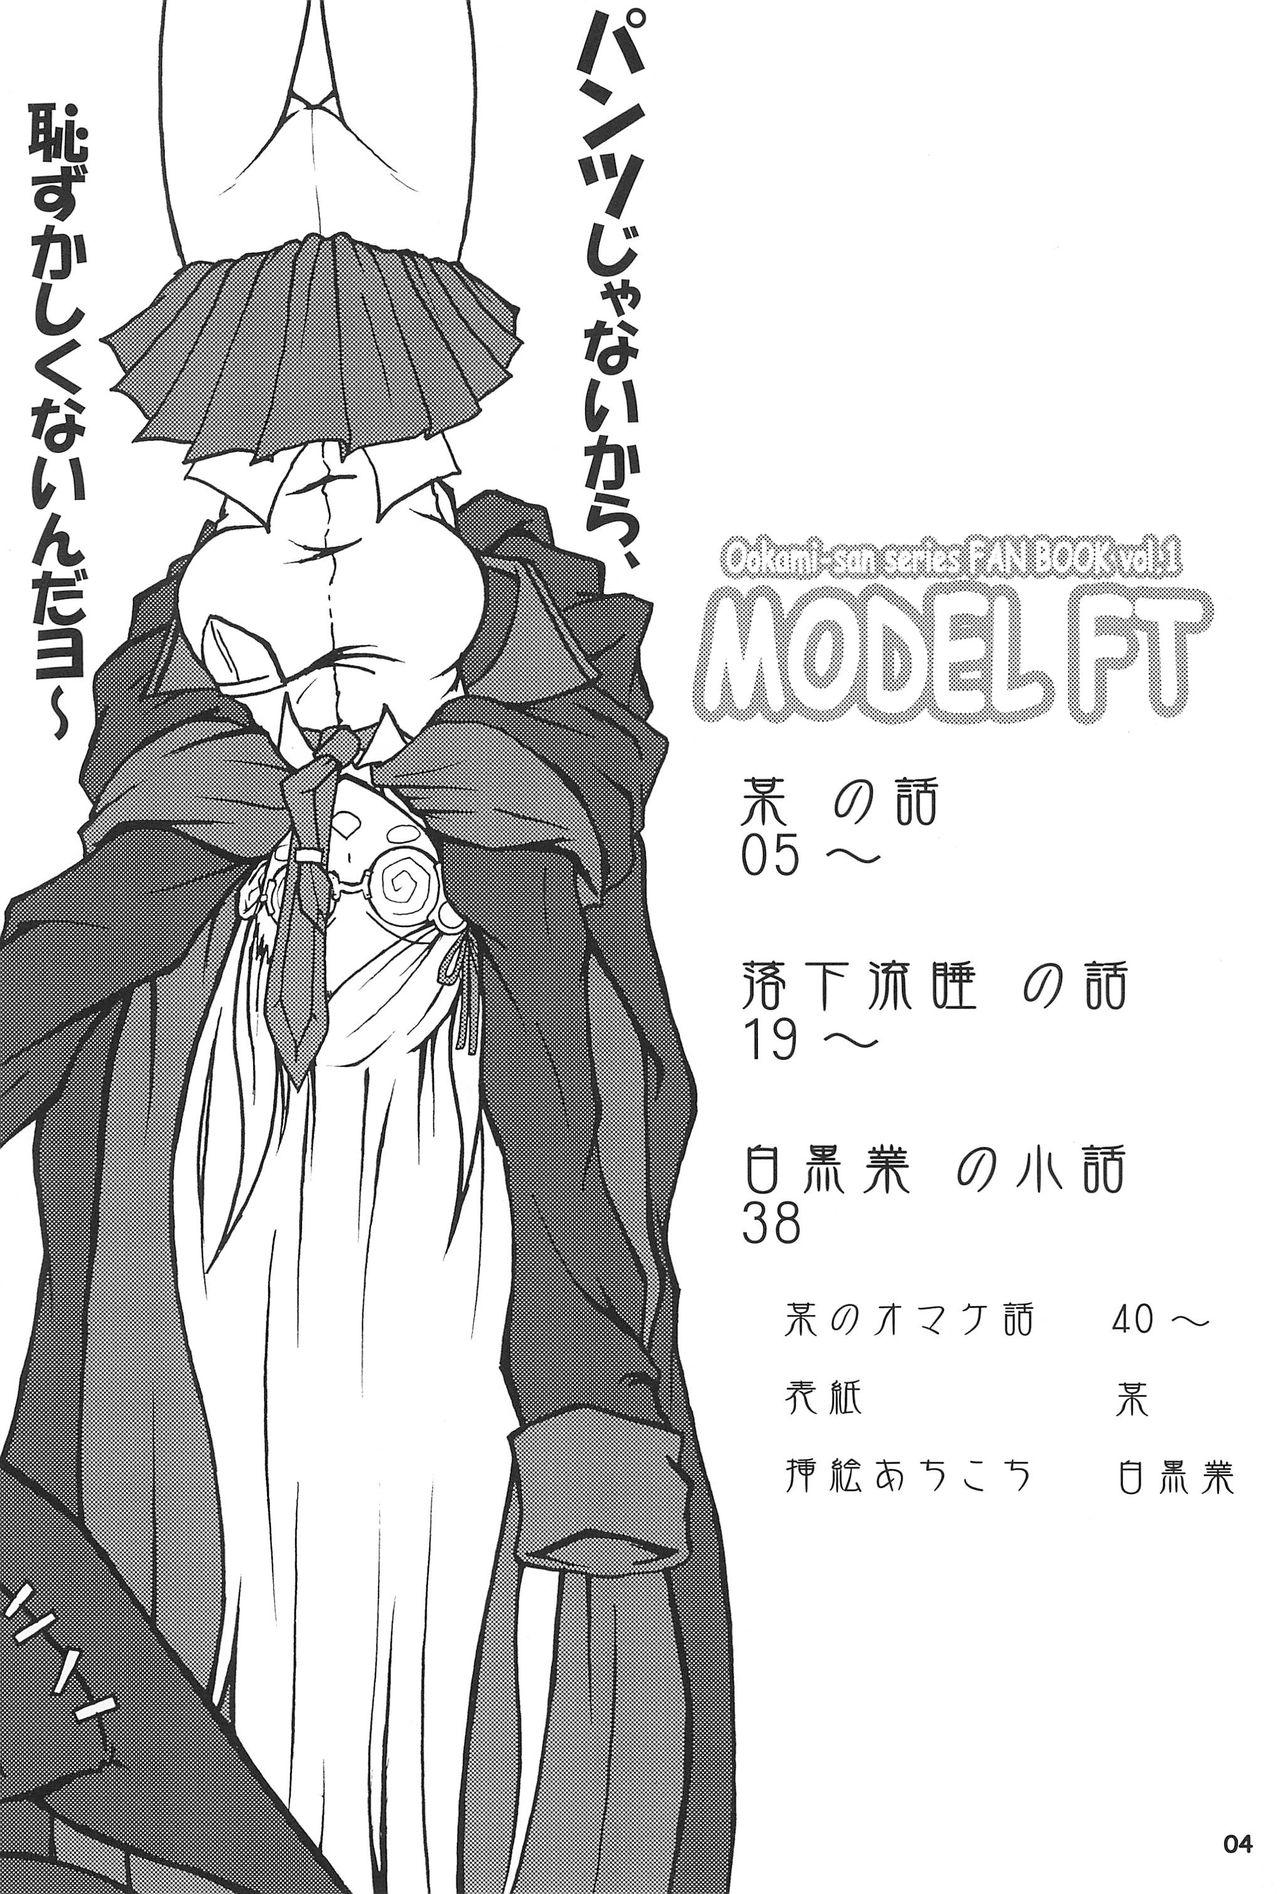 Handjob MODEL FT - Ookami san to shichinin no nakama tachi Butt Plug - Page 4